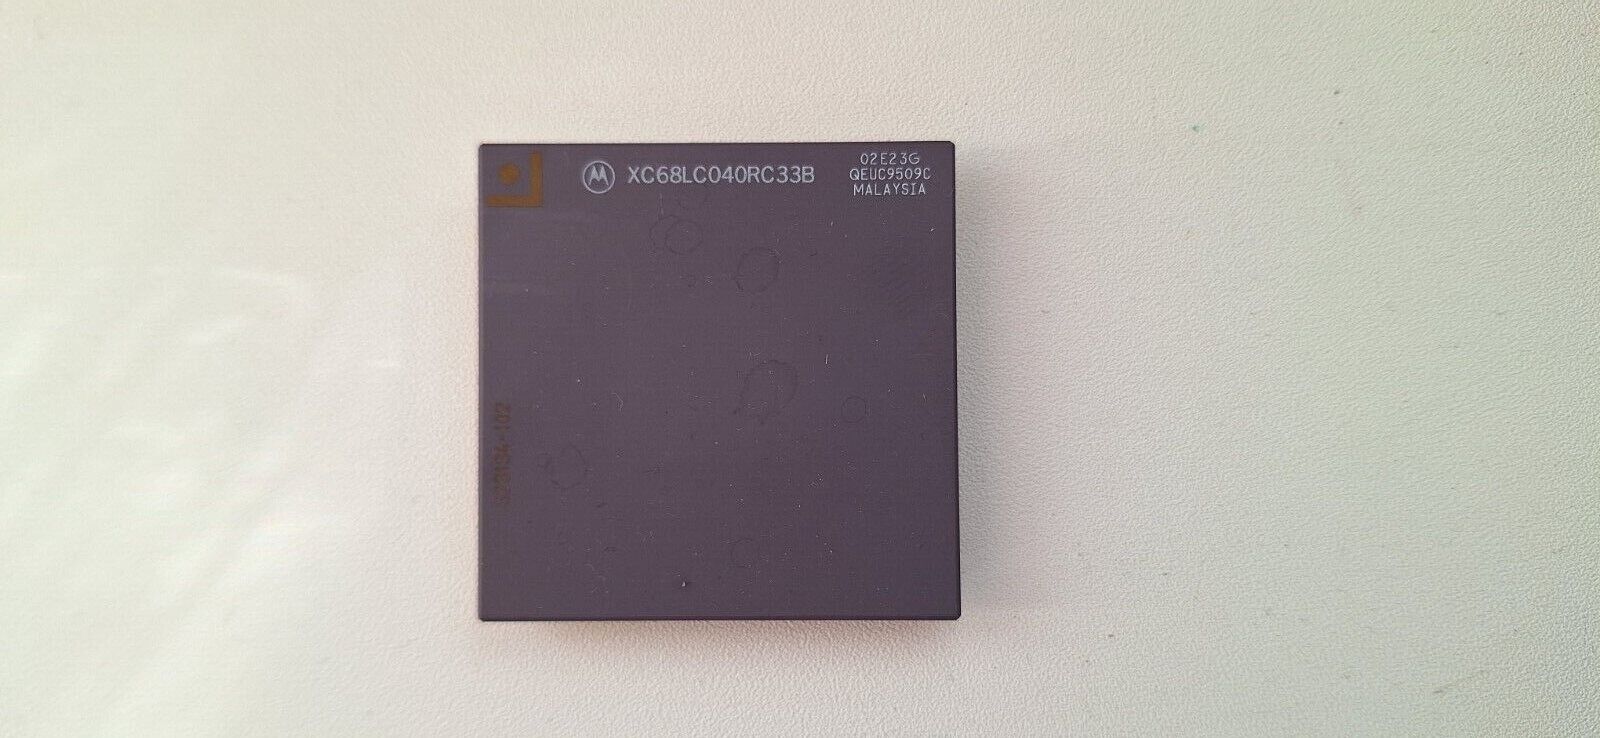 Motorola XC68LC040RC33B 68040 02E23G vintage CPU GOLD Apple Macintosh AMIGA